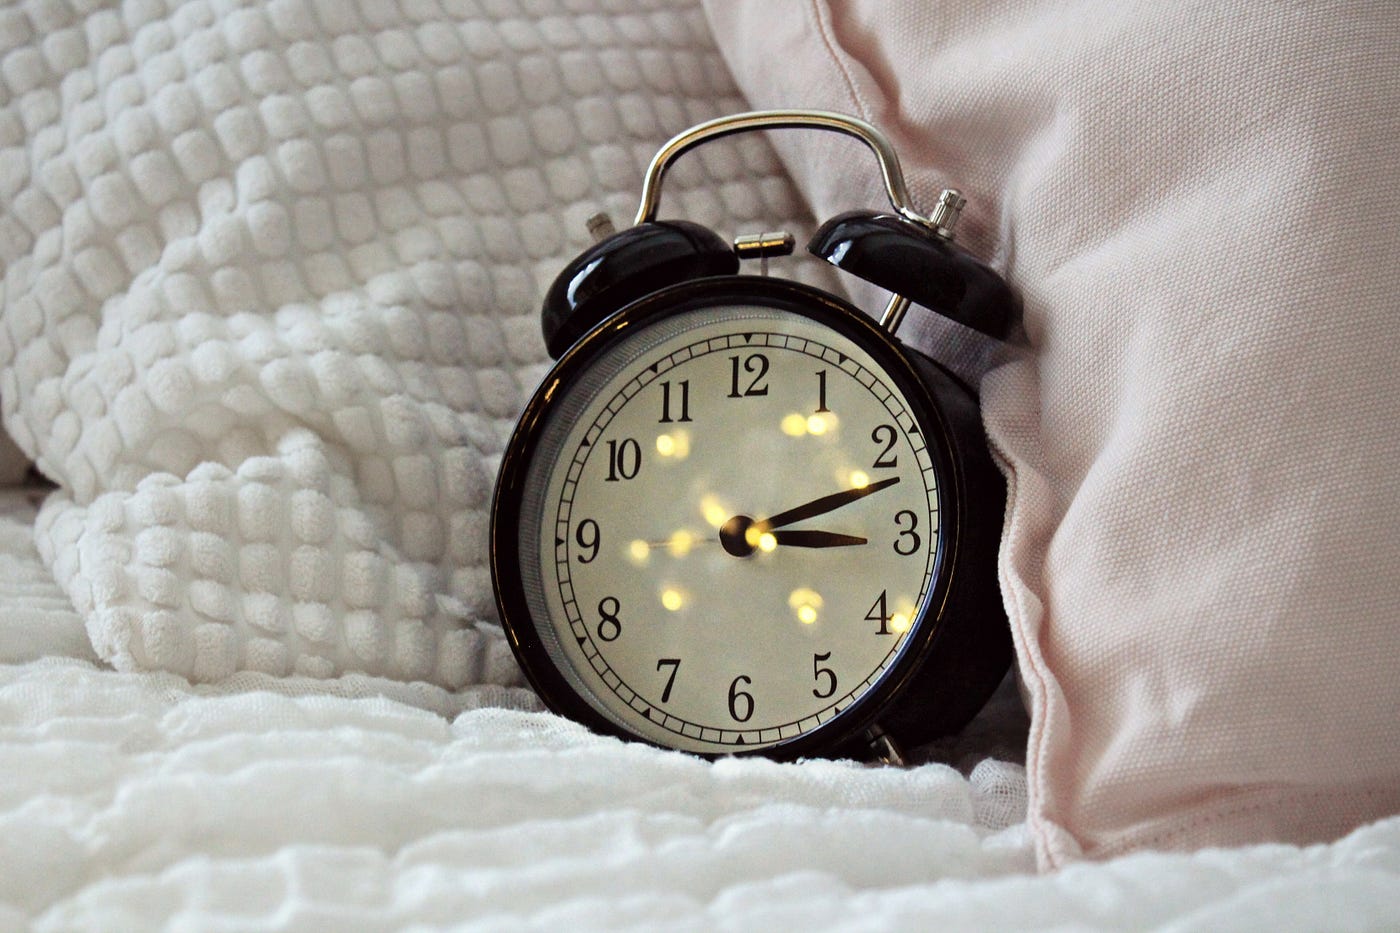 Buy an Alarm Clock to Change Your Life | by Sithara Ariyarathna |  ILLUMINATION | Medium